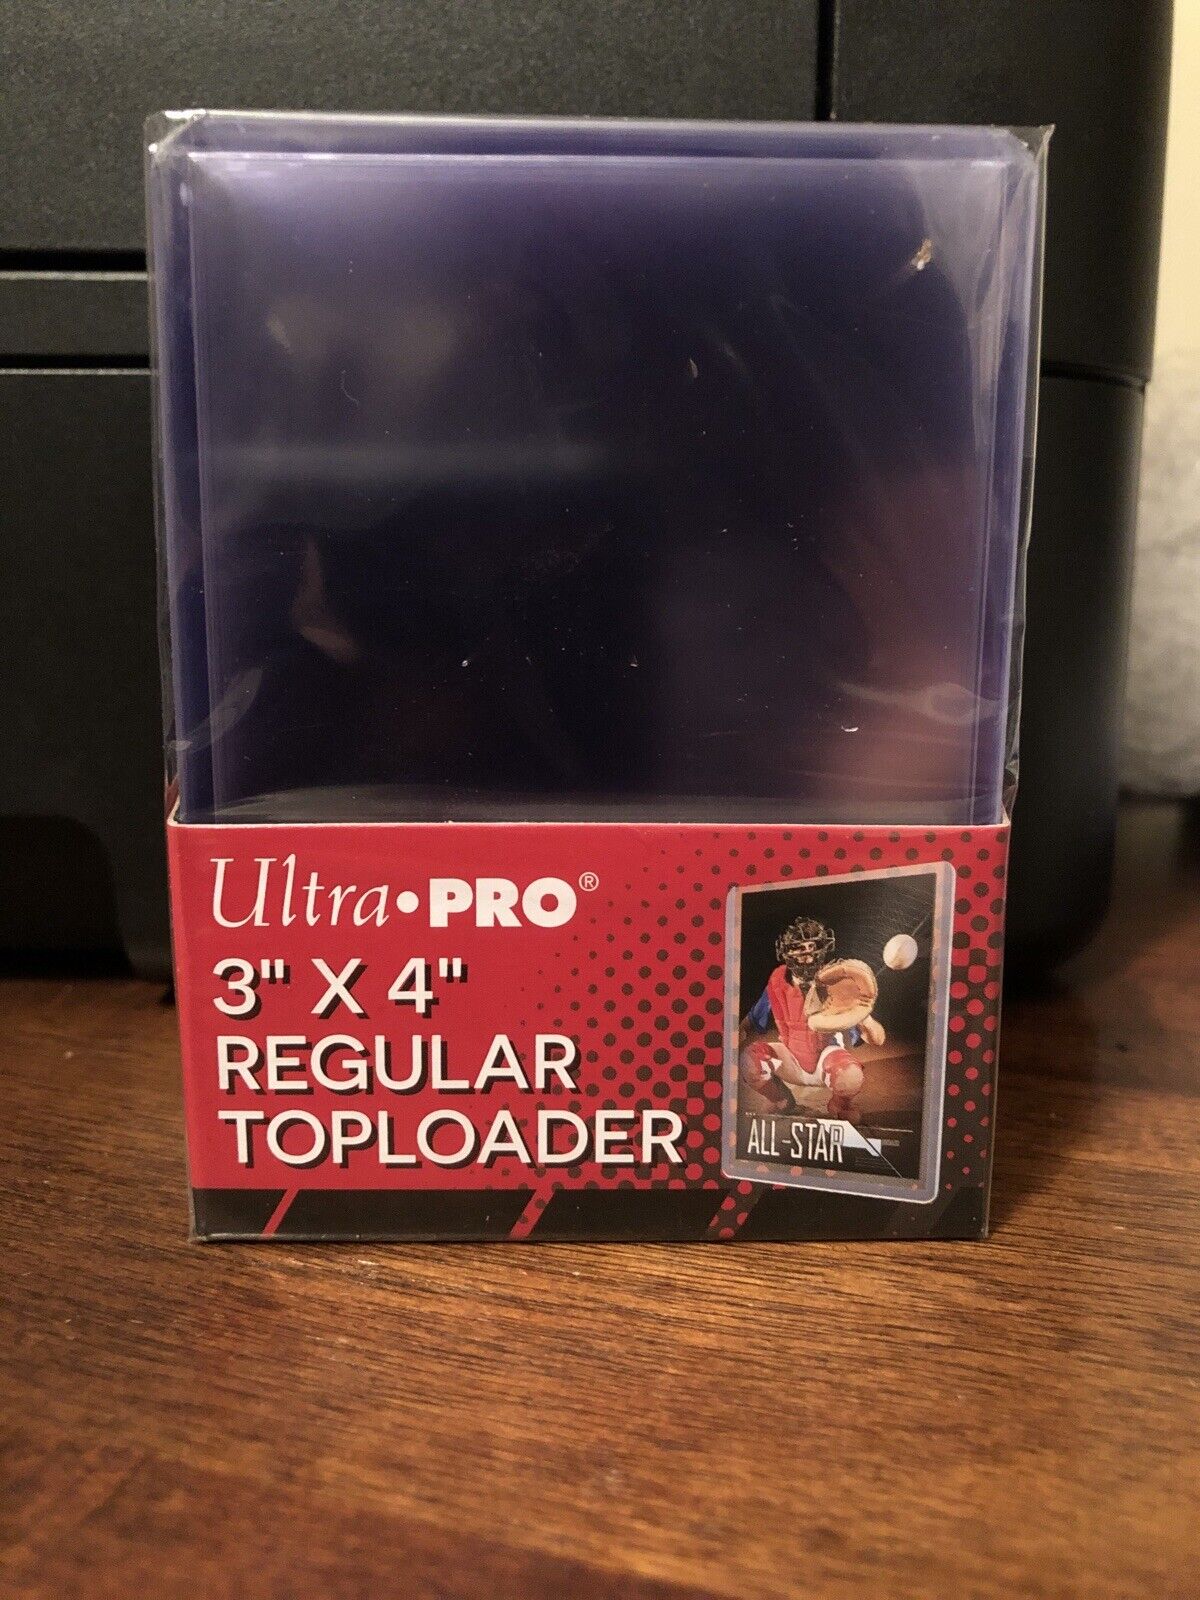 Ultra Pro 3X4 Regular Toploaders 35pt 1 Pack of 25 for Standard Sized Cards